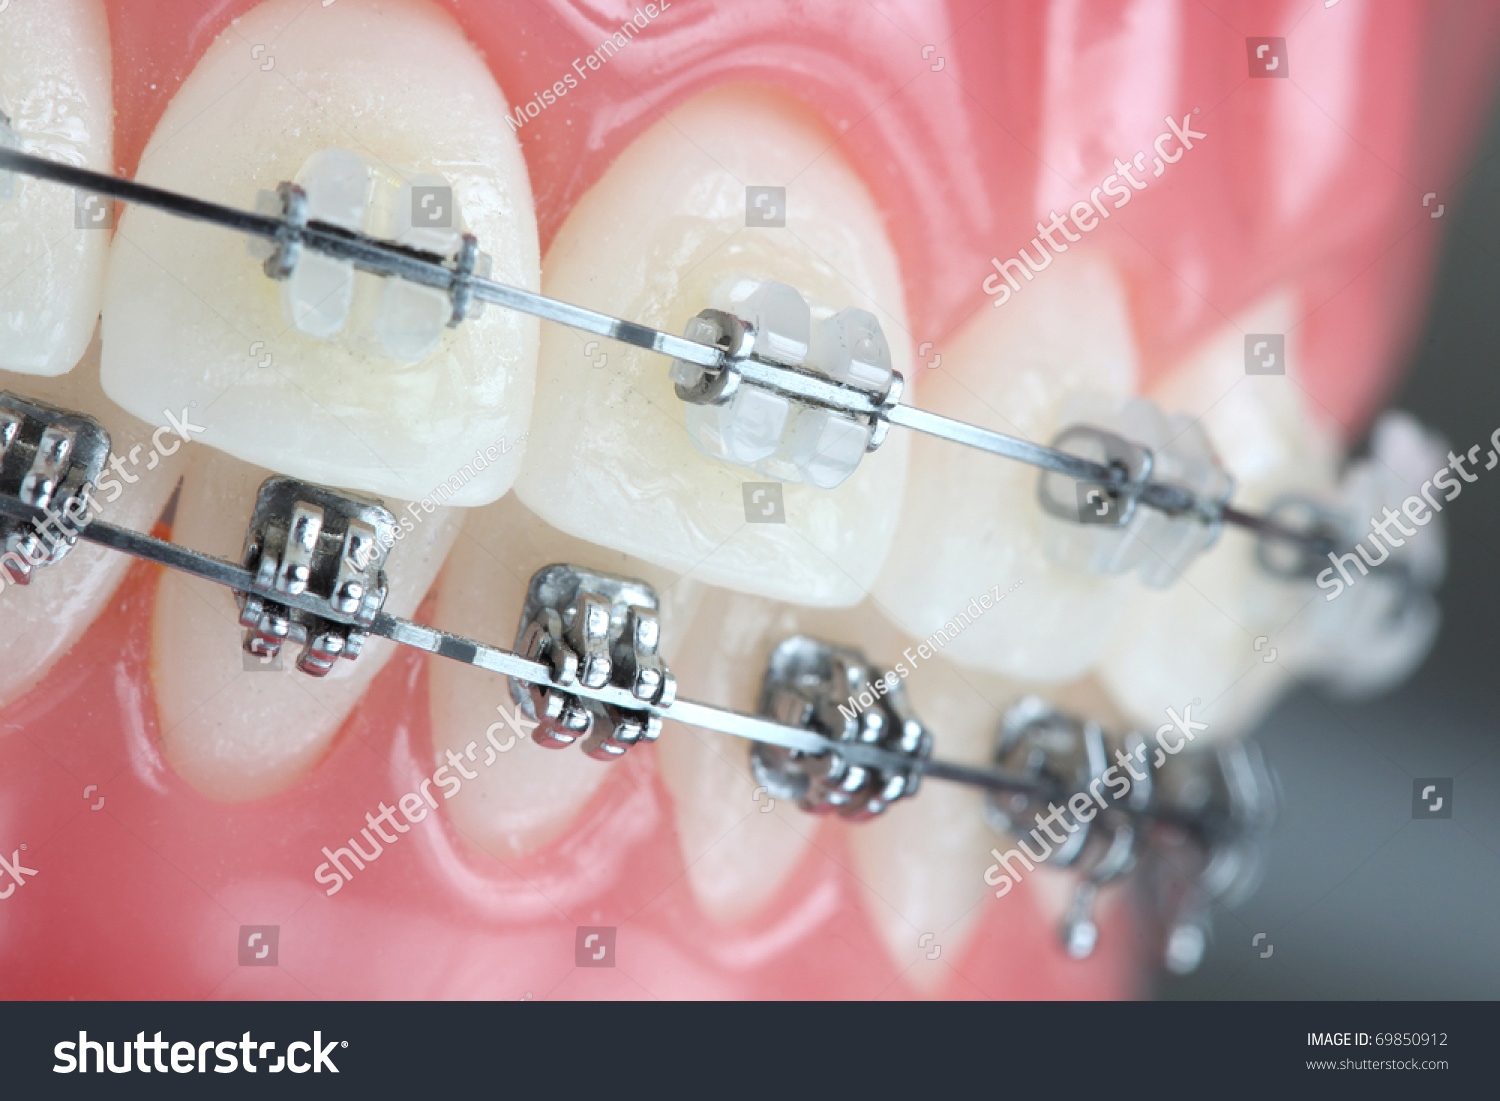 Denture with braces #69850912